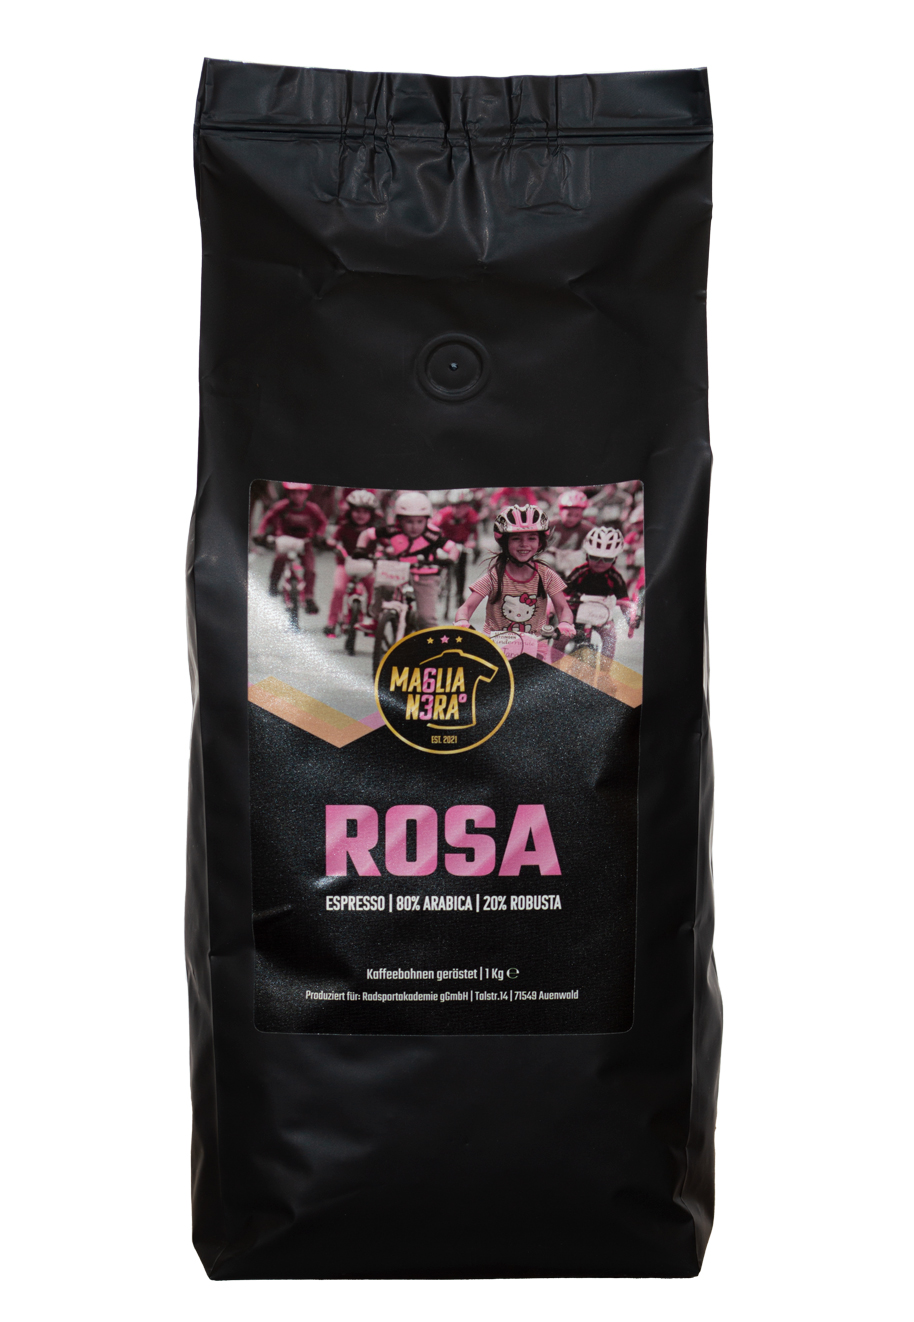 MA6LIA N3RA° Coffee / 1000 g Bohne  Rosa